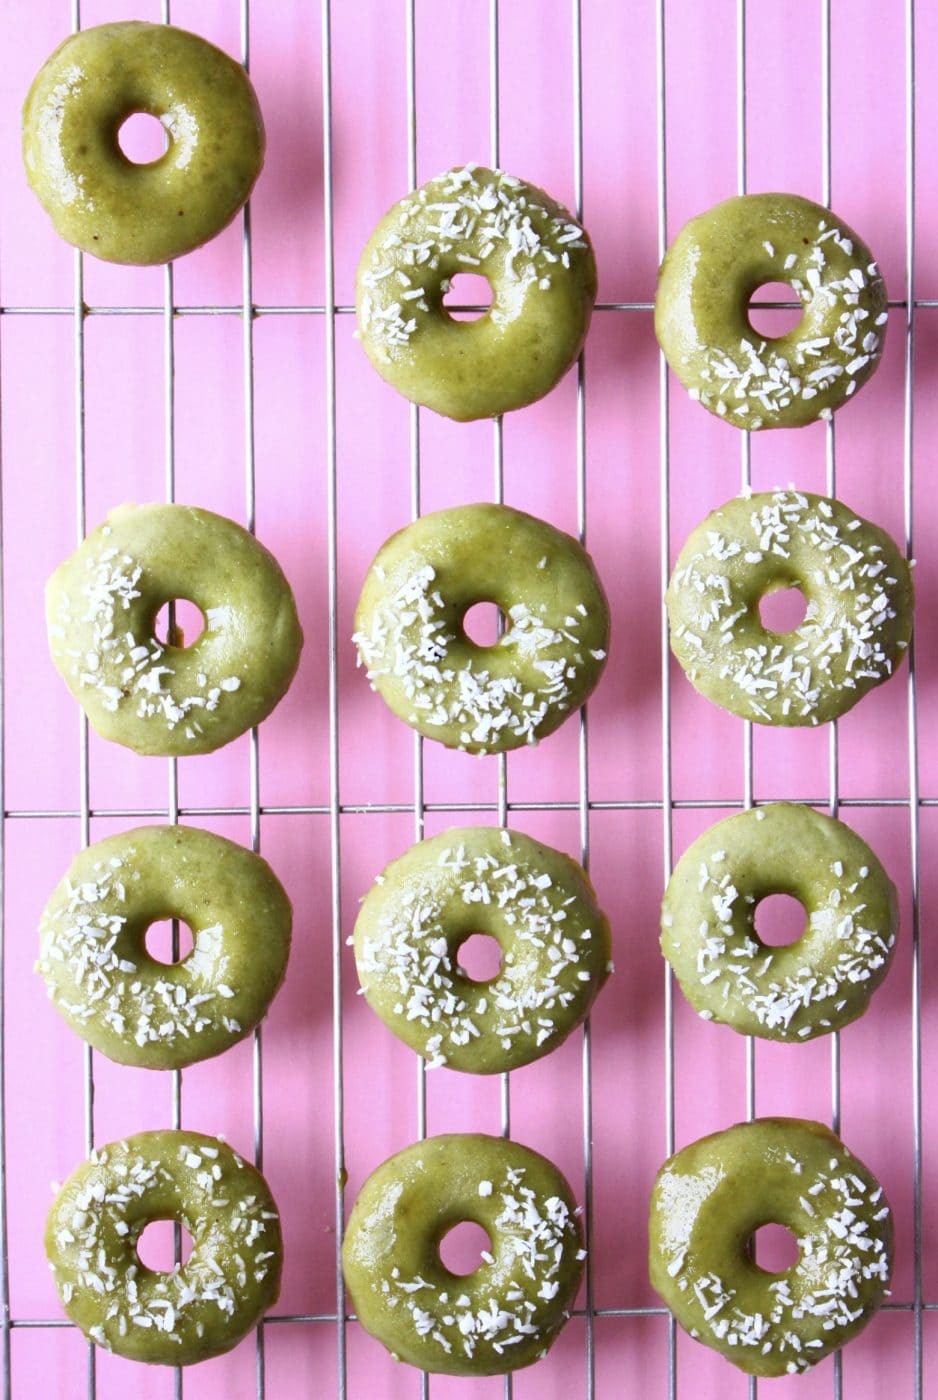 Rhian's Recipes: Vegan Matcha Baked Donuts (GF)